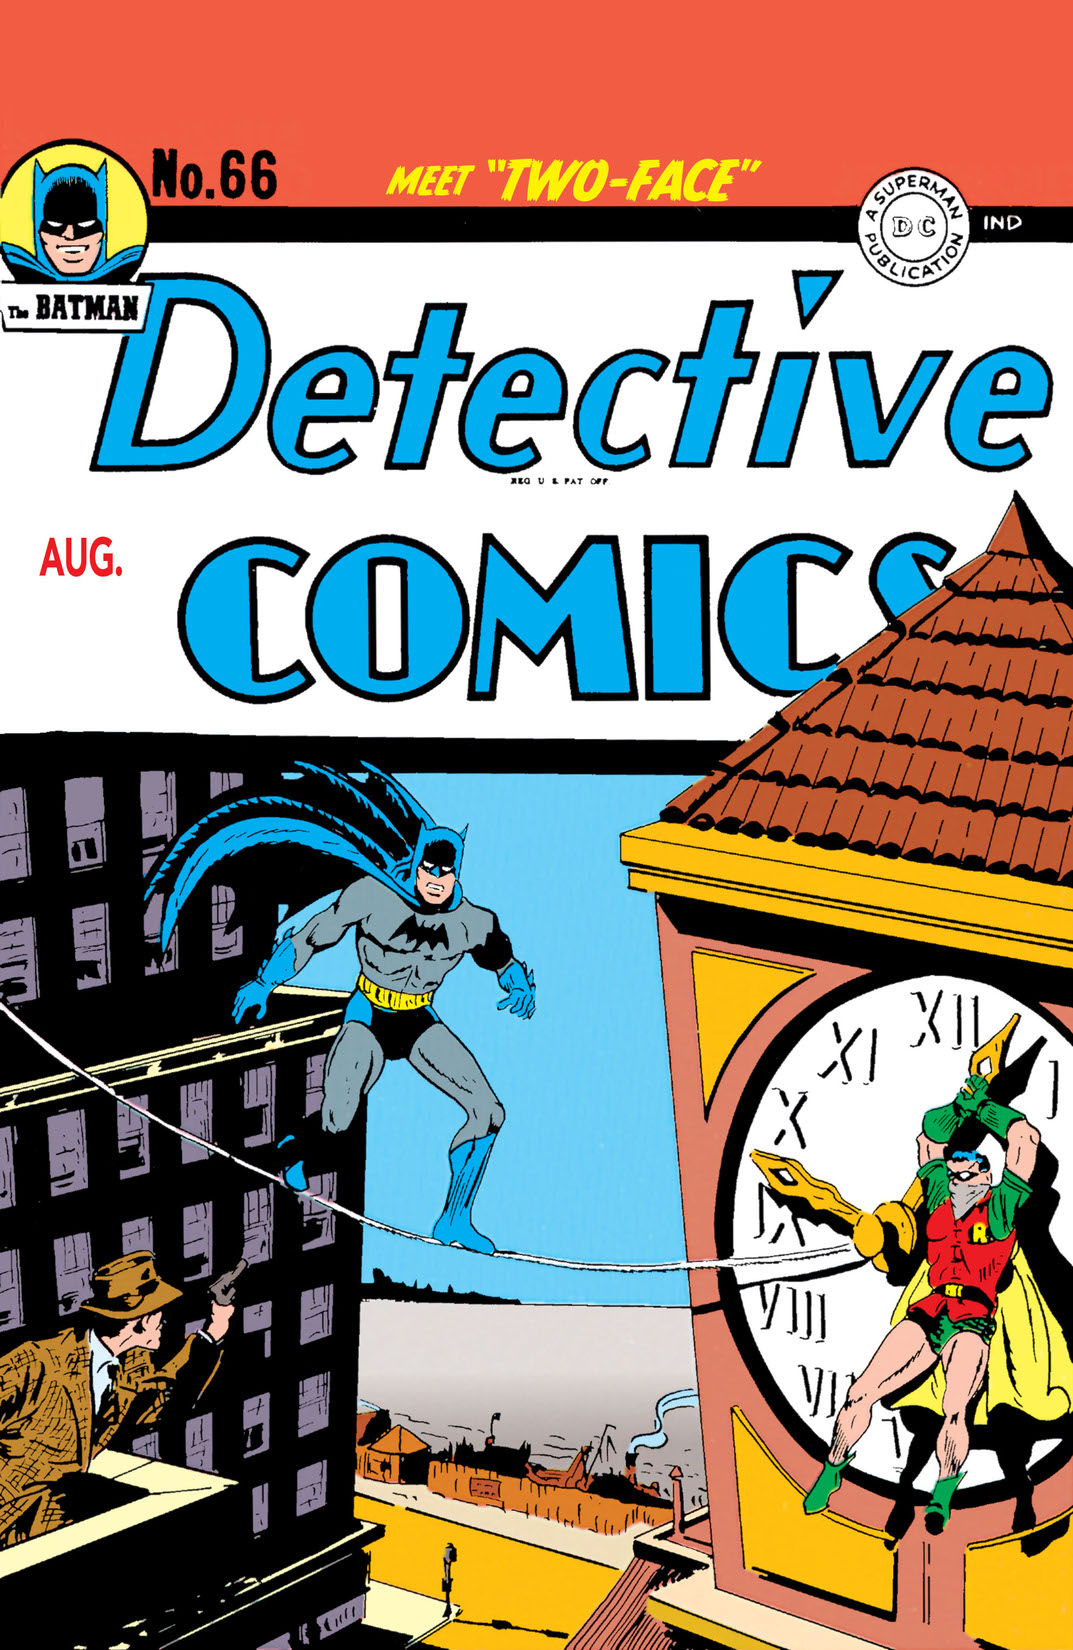 Detective Comics (1942-) #66 preview images